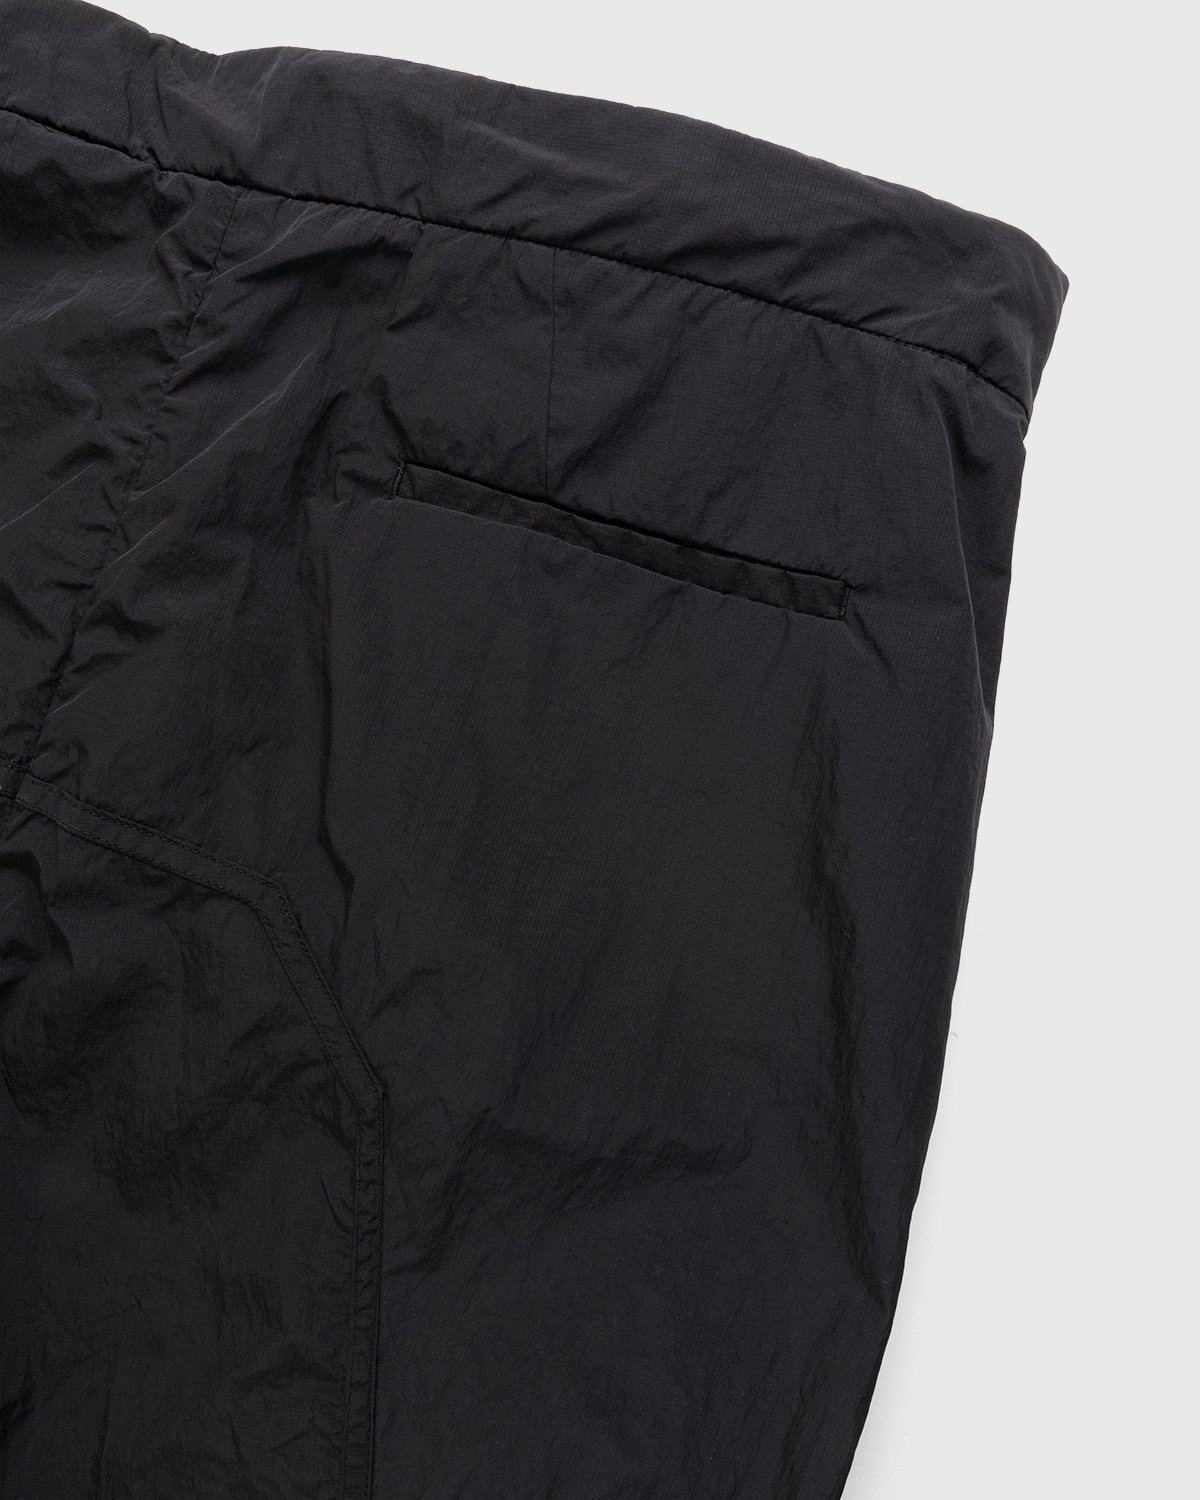 A-Cold-Wall* – Portage Pant Black - Pants - Black - Image 3